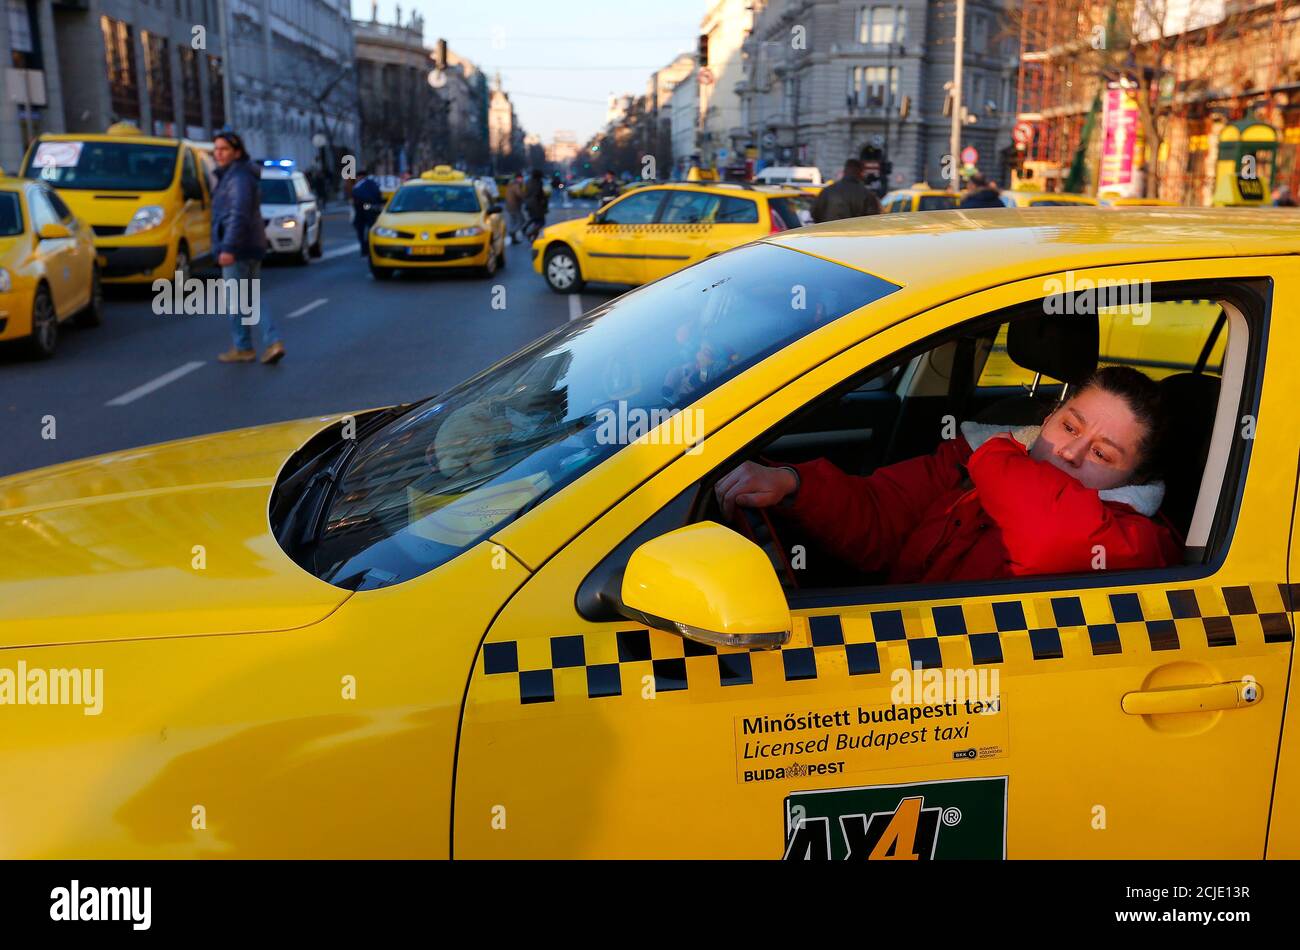 Таксист подвез девушку. Такси Будапешт. Budapest Taxi.